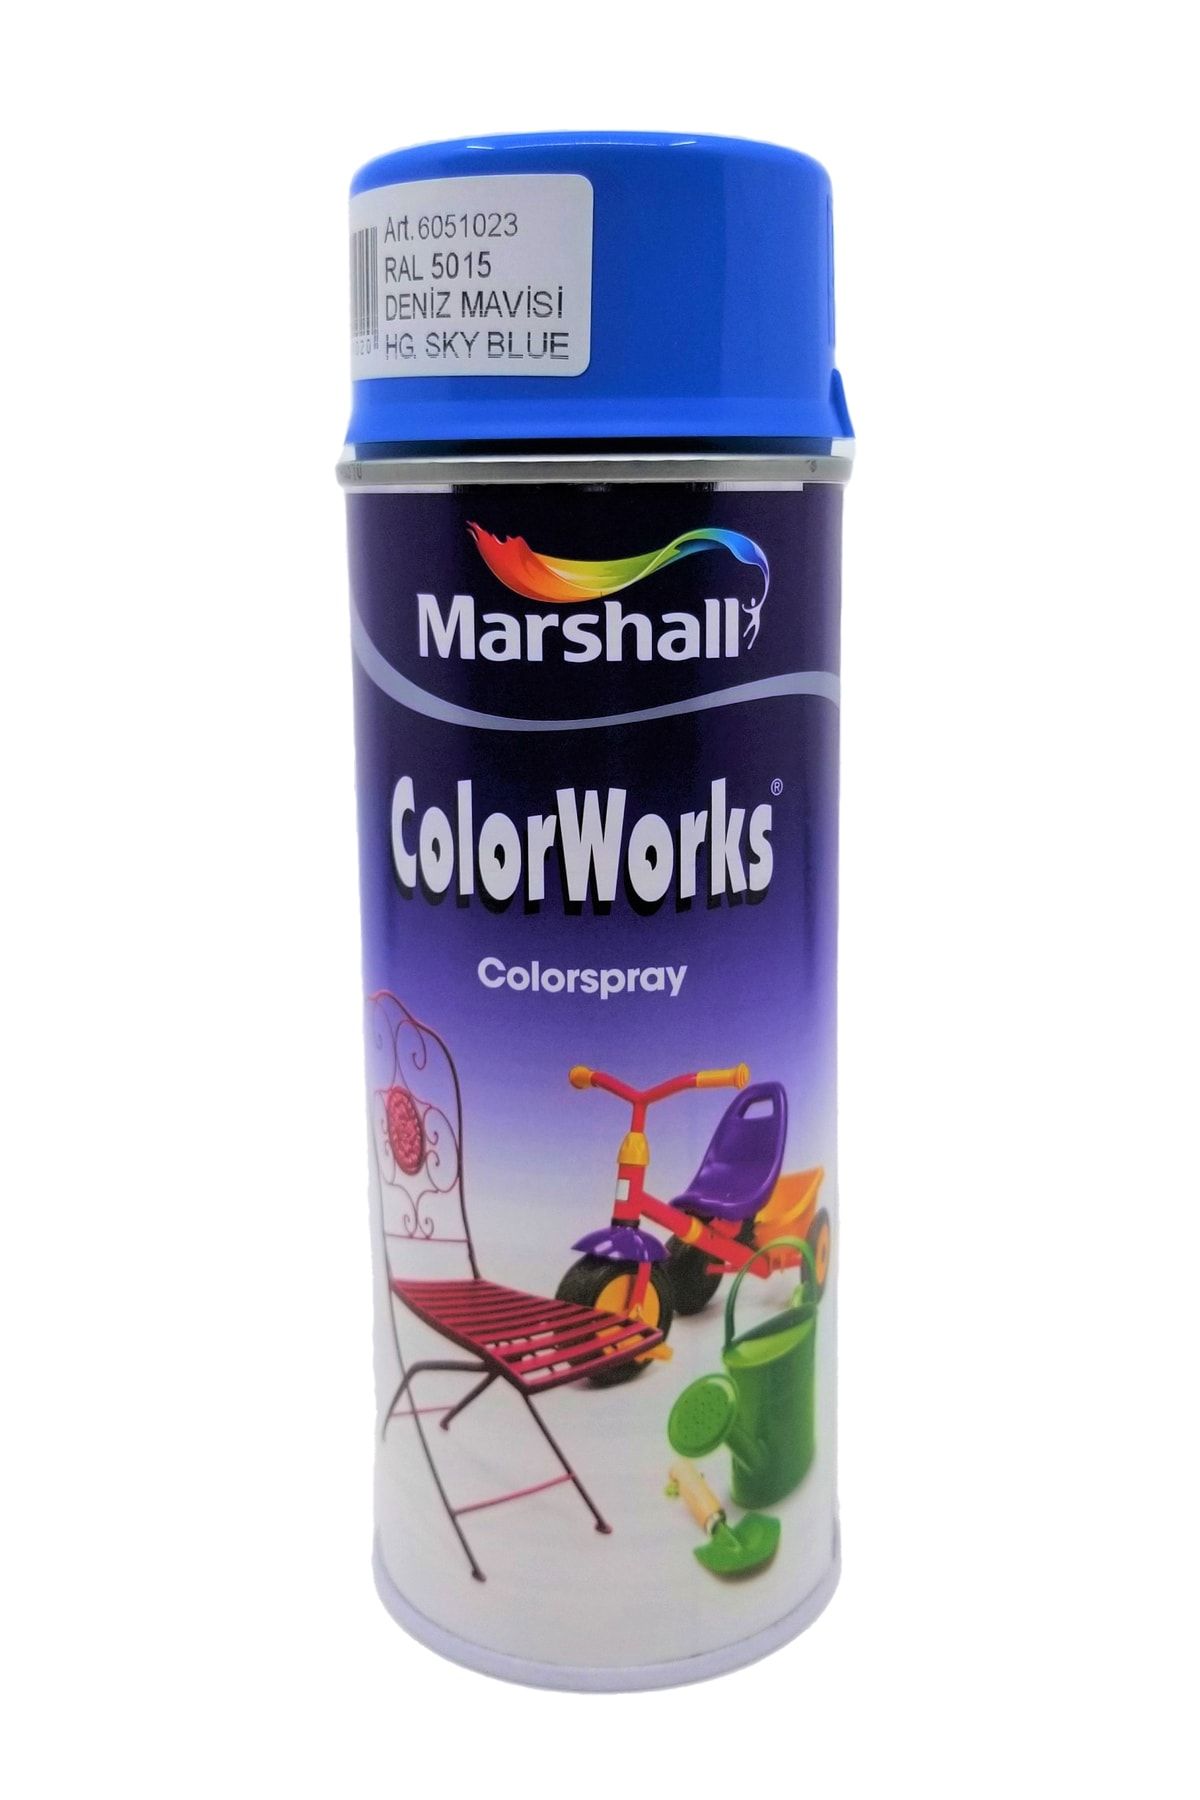 Marshall Colorworks Sentetik Sprey Boya 400ml Deniz Mavisi